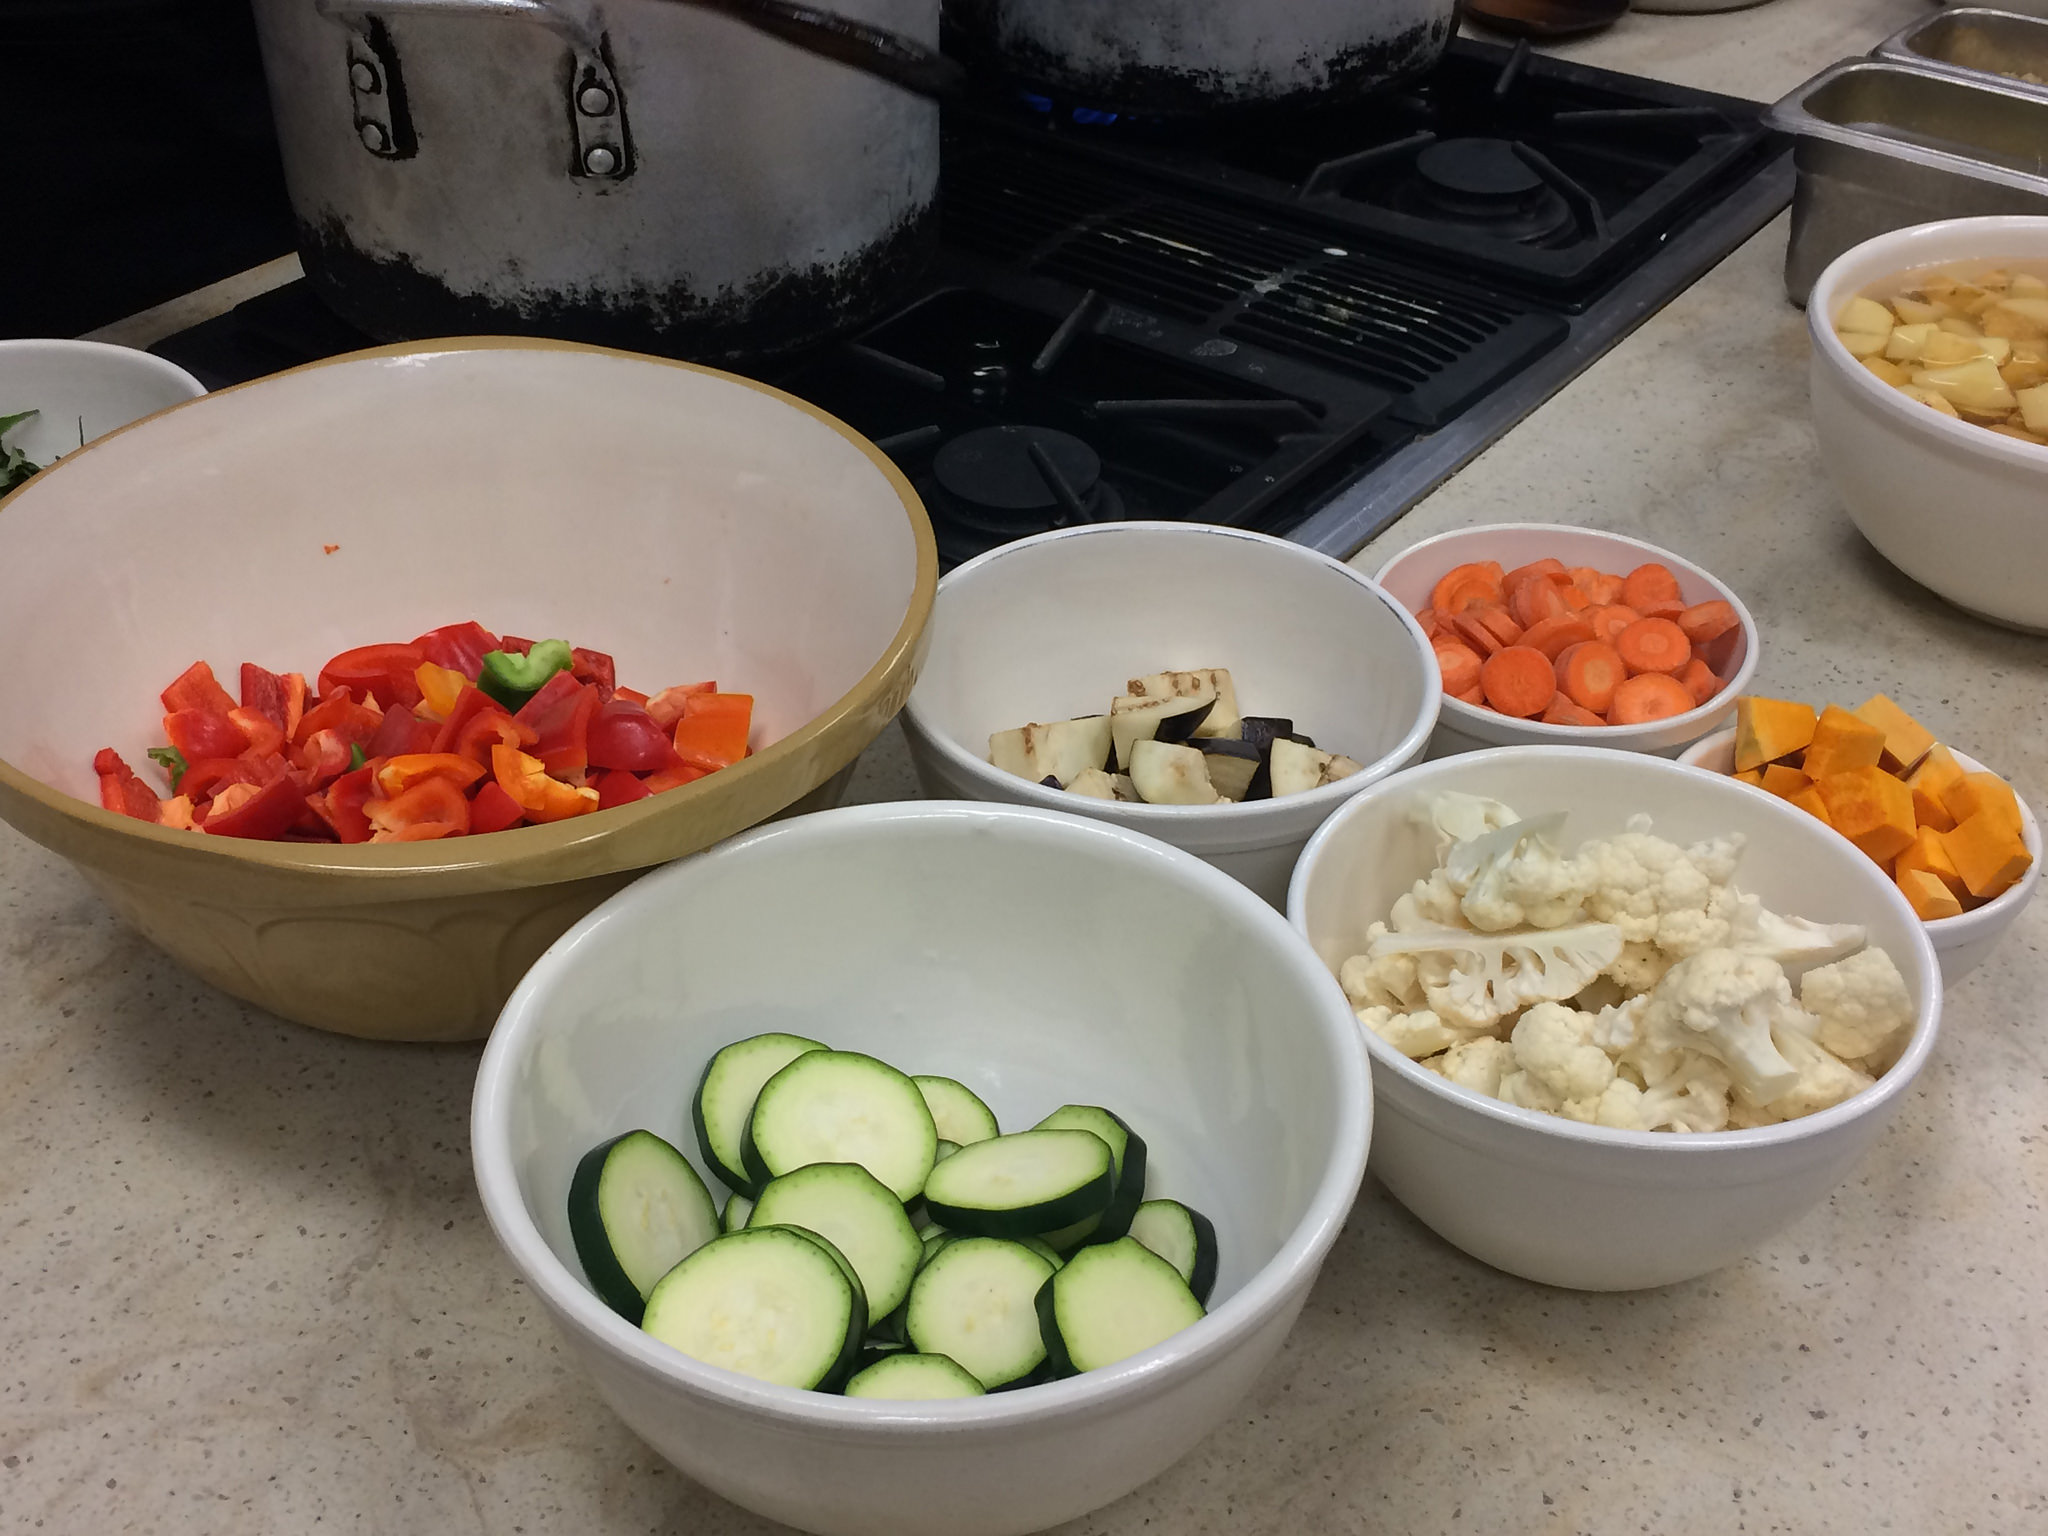 We included all these fresh, colorful veggies!  إستخدمنا كل هاي الخضراوات والألوان للكاري.